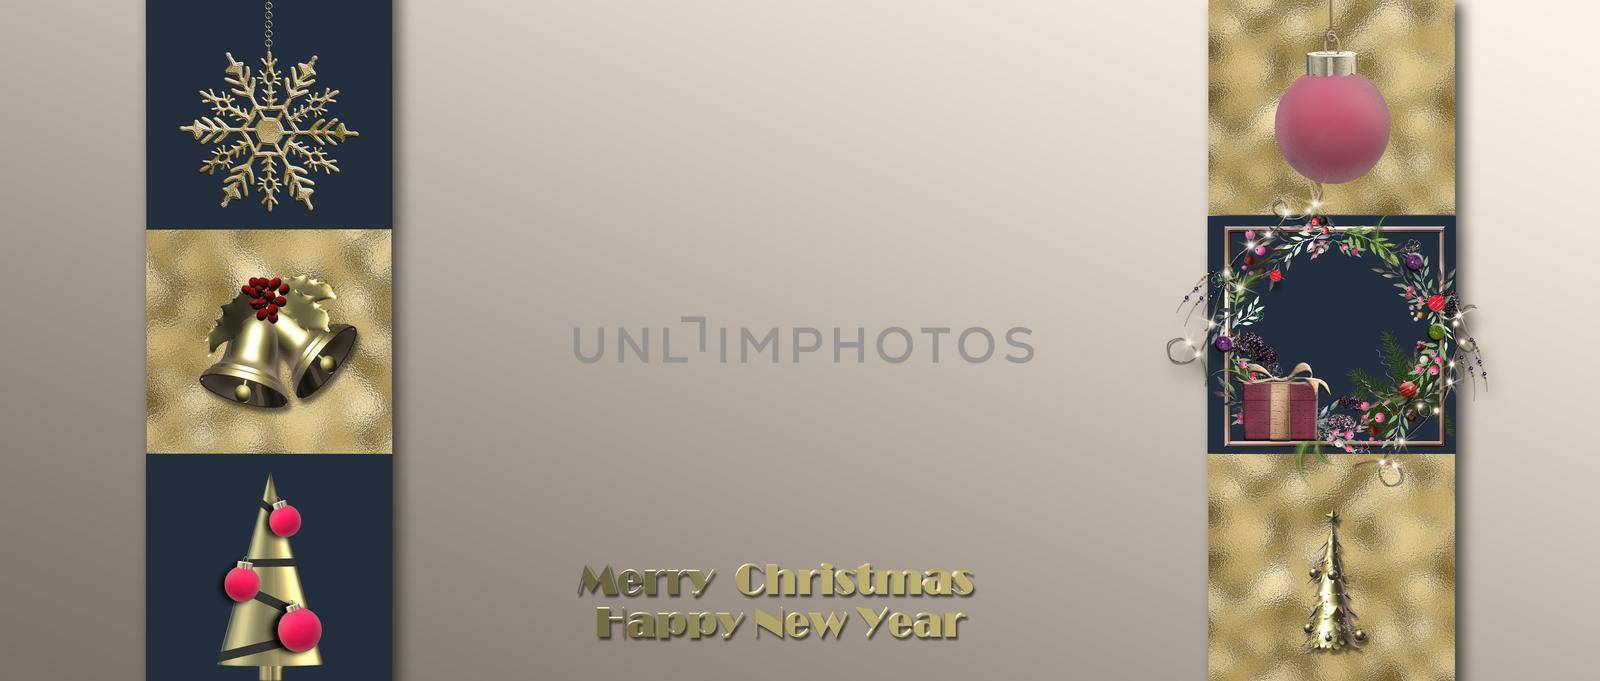 Christmas holiday card by NelliPolk